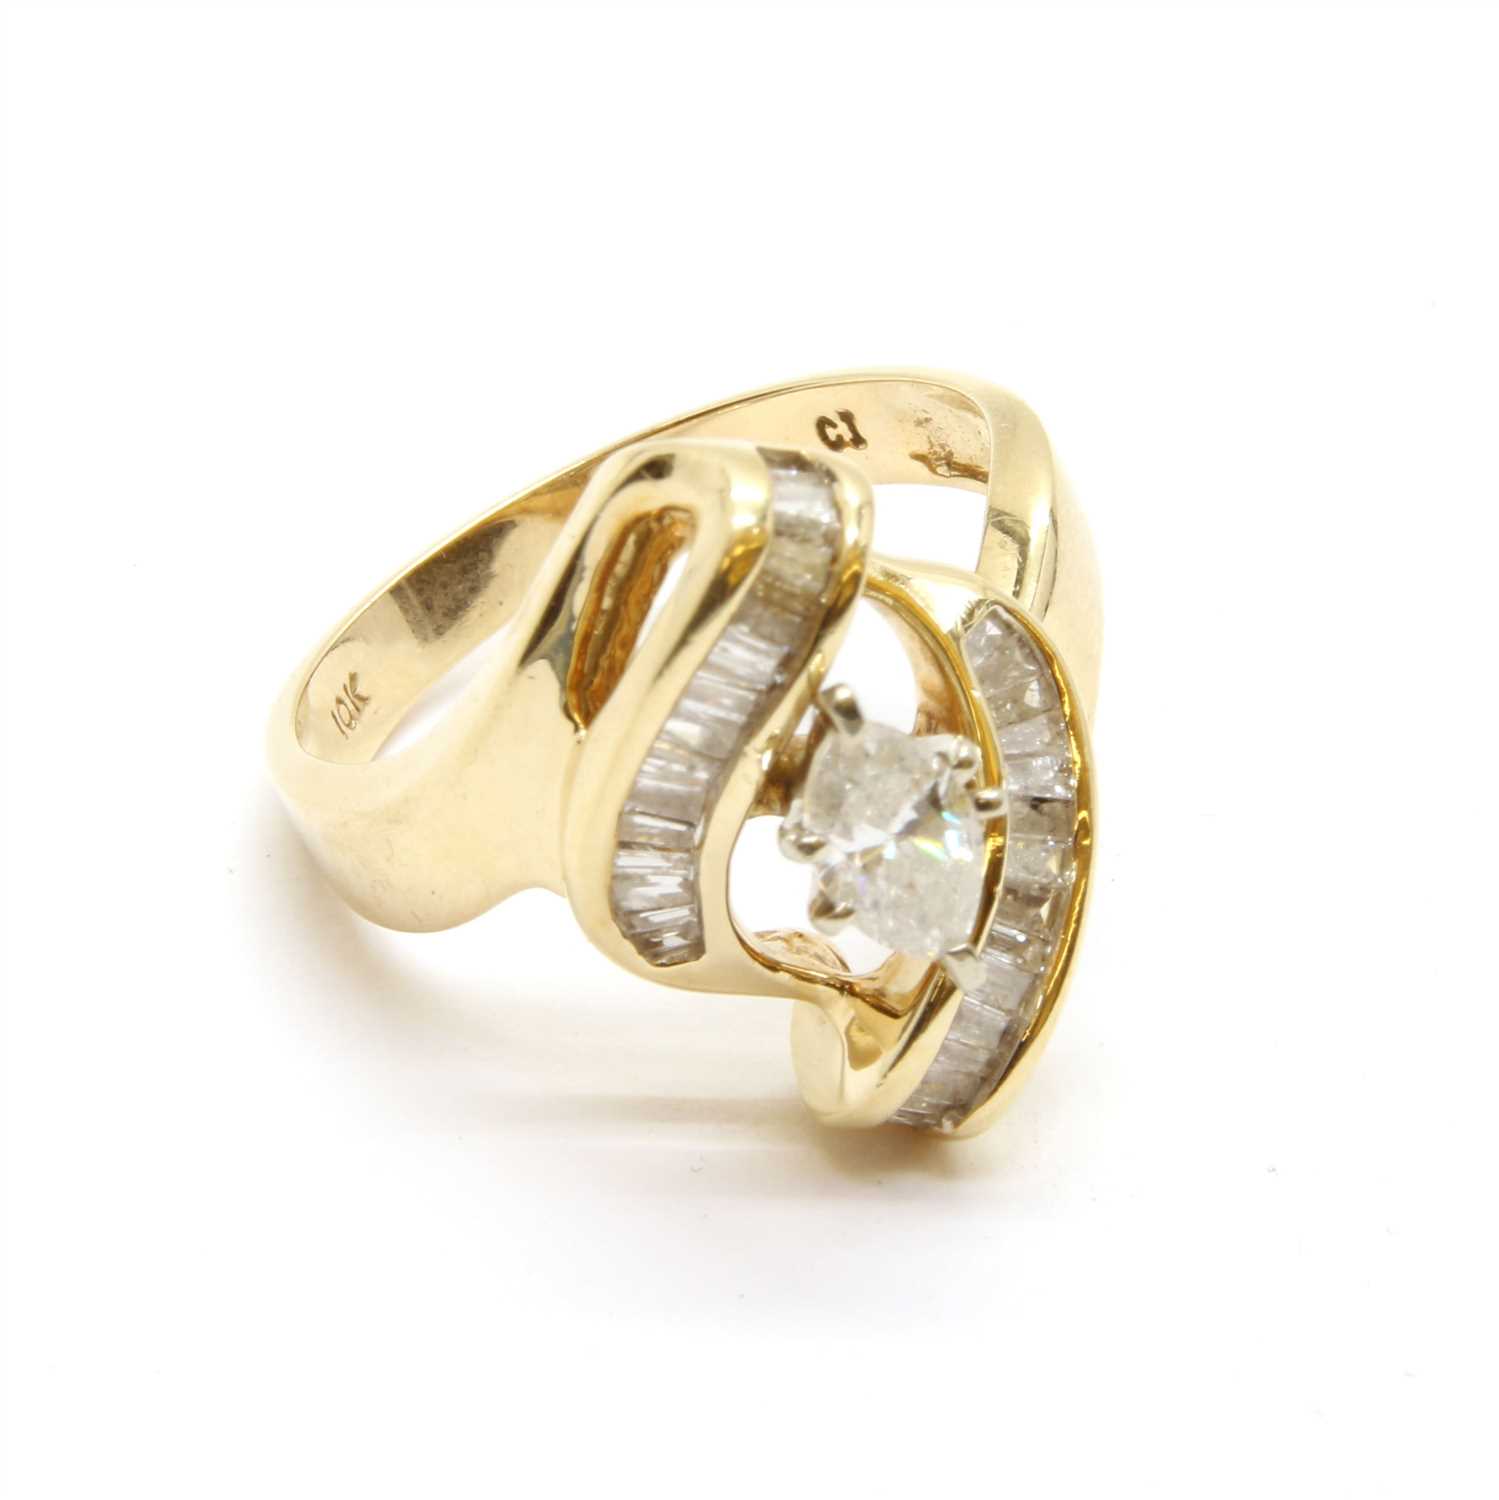 Lot 12 - An American single stone marquise cut diamond ring